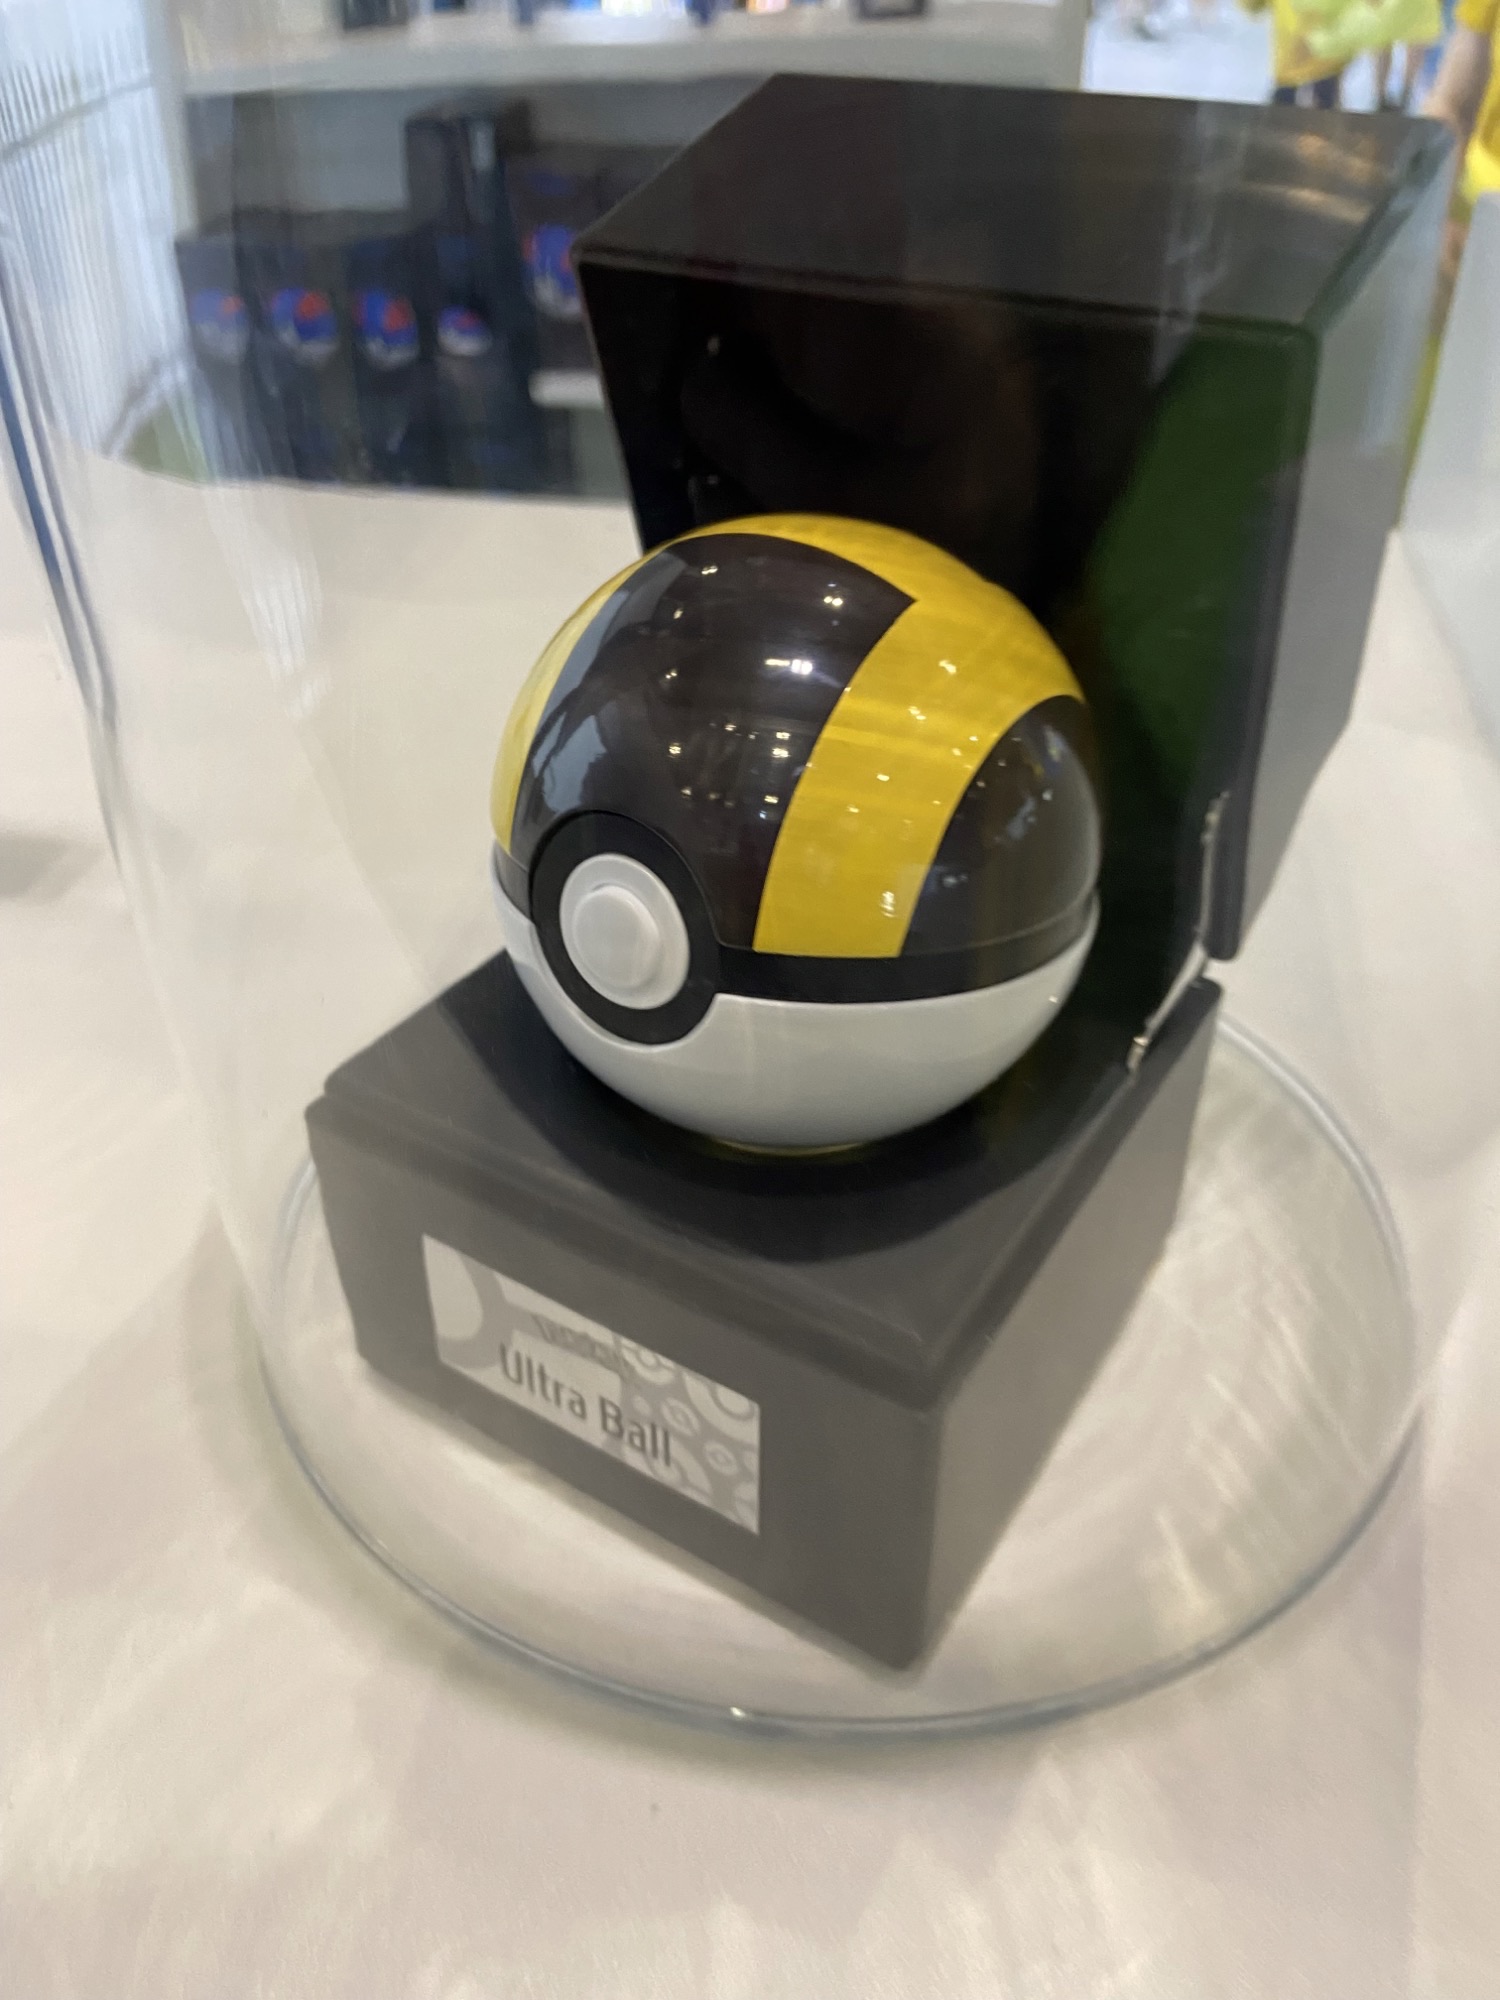 Pokémon World Championships 2022 vai decorrer em Londres em agosto -  eSports - SAPO Desporto